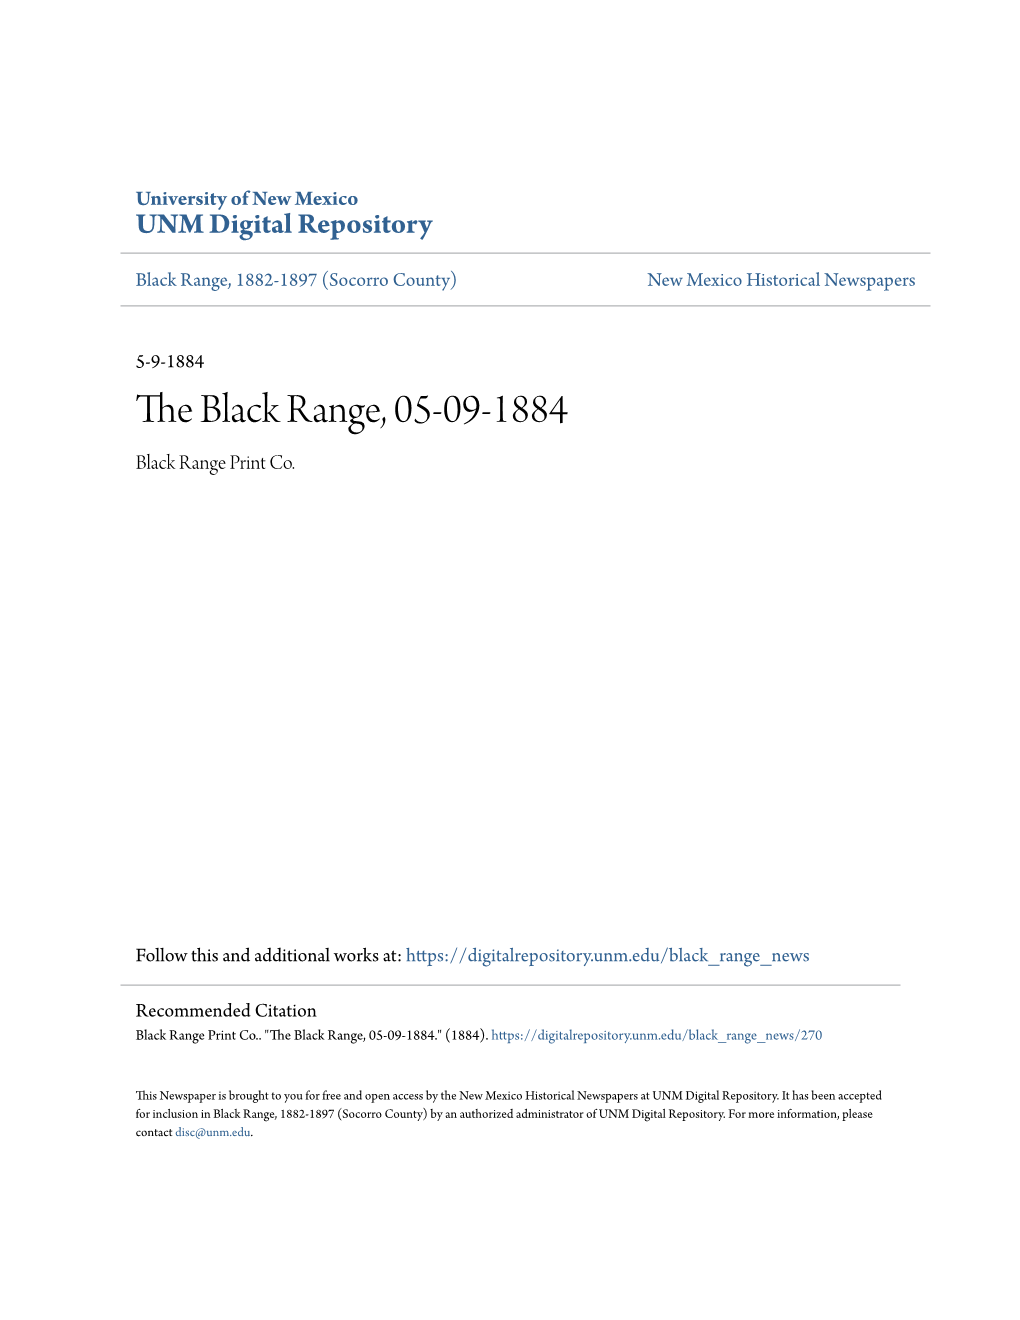 The Black Range, 05-09-1884